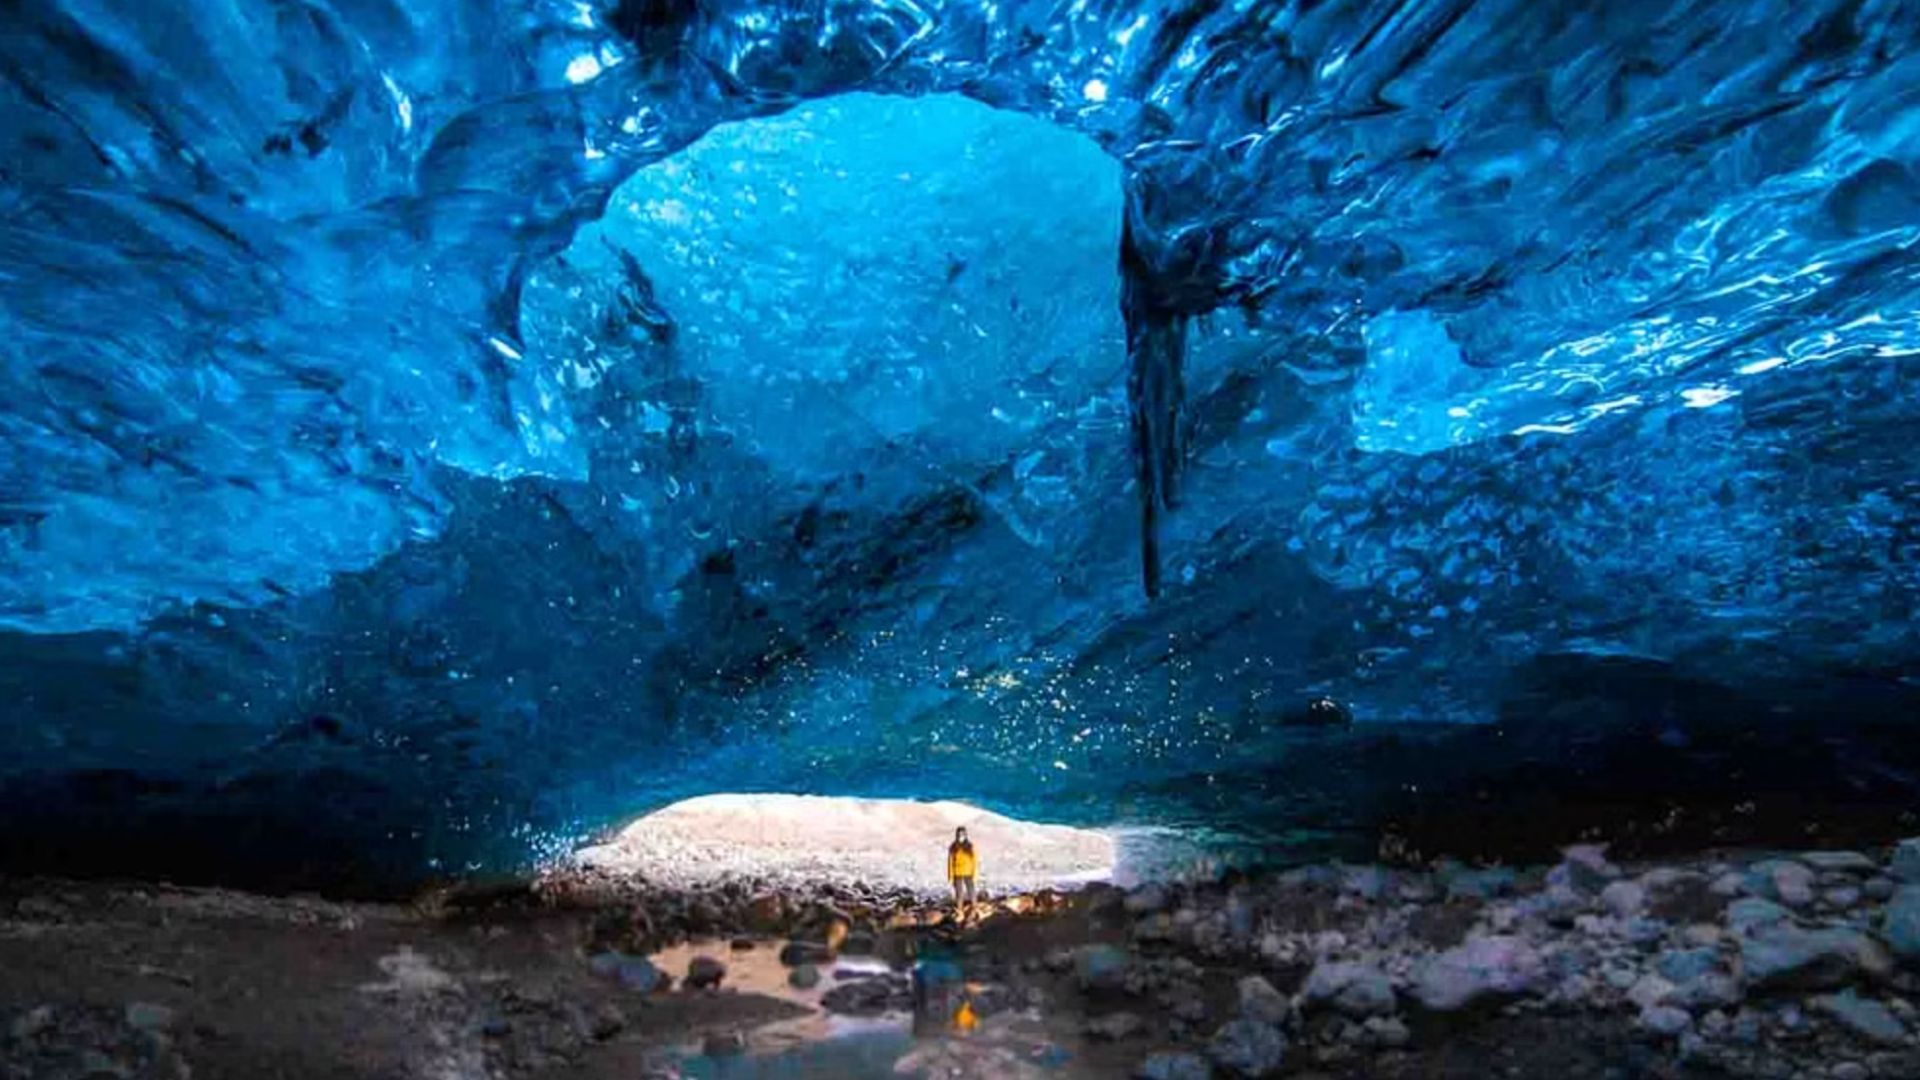 blue cave tour iceland